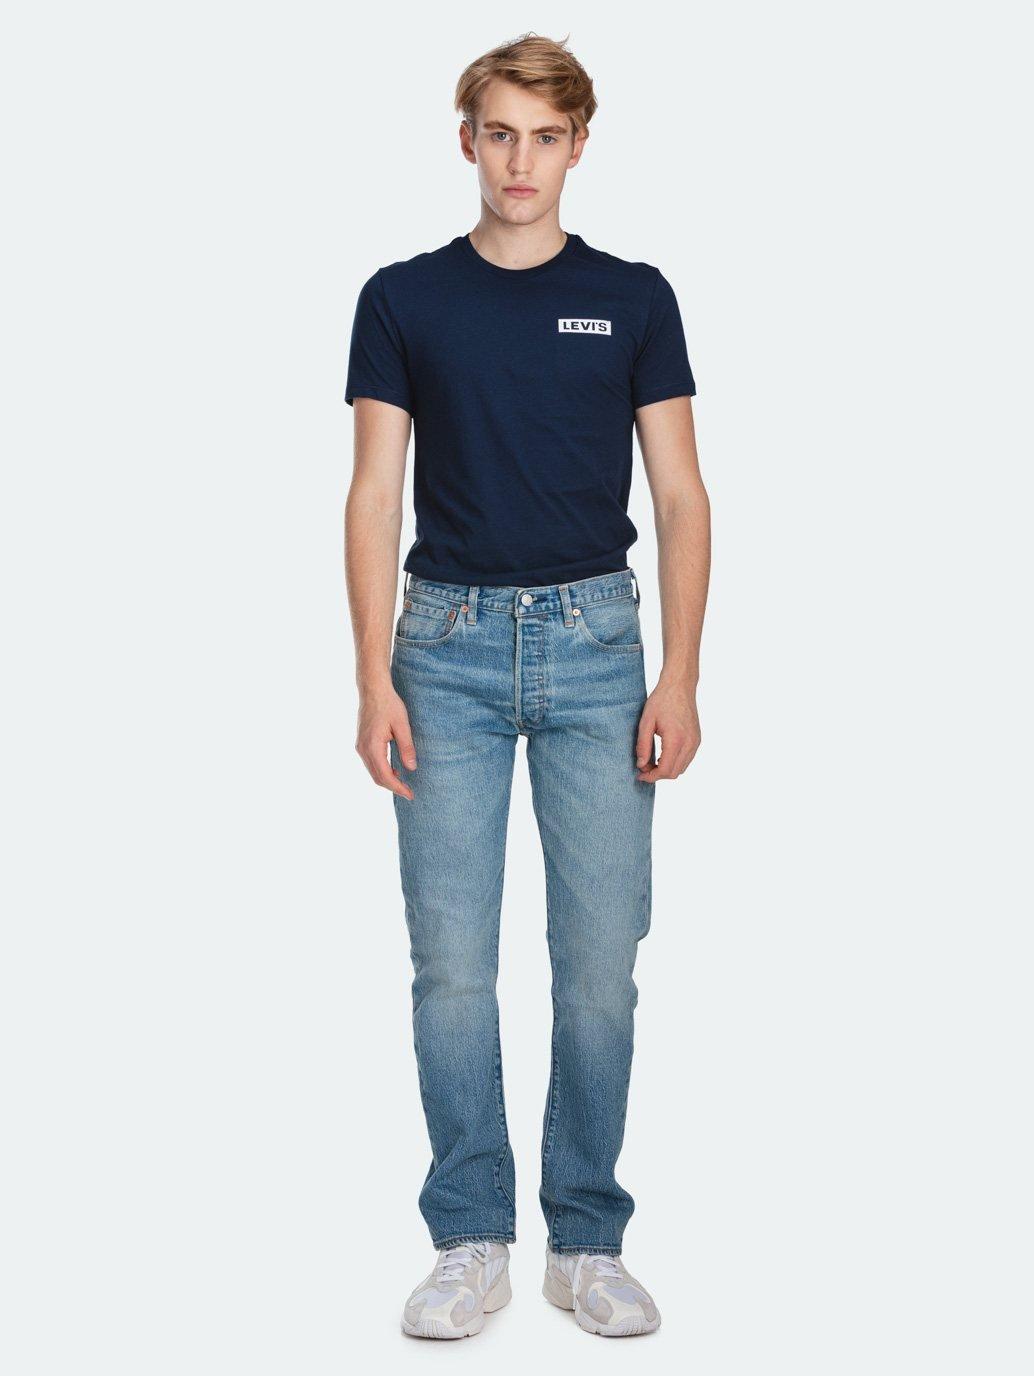 levis malaysia 501 original fit jeans for men basil crane front view